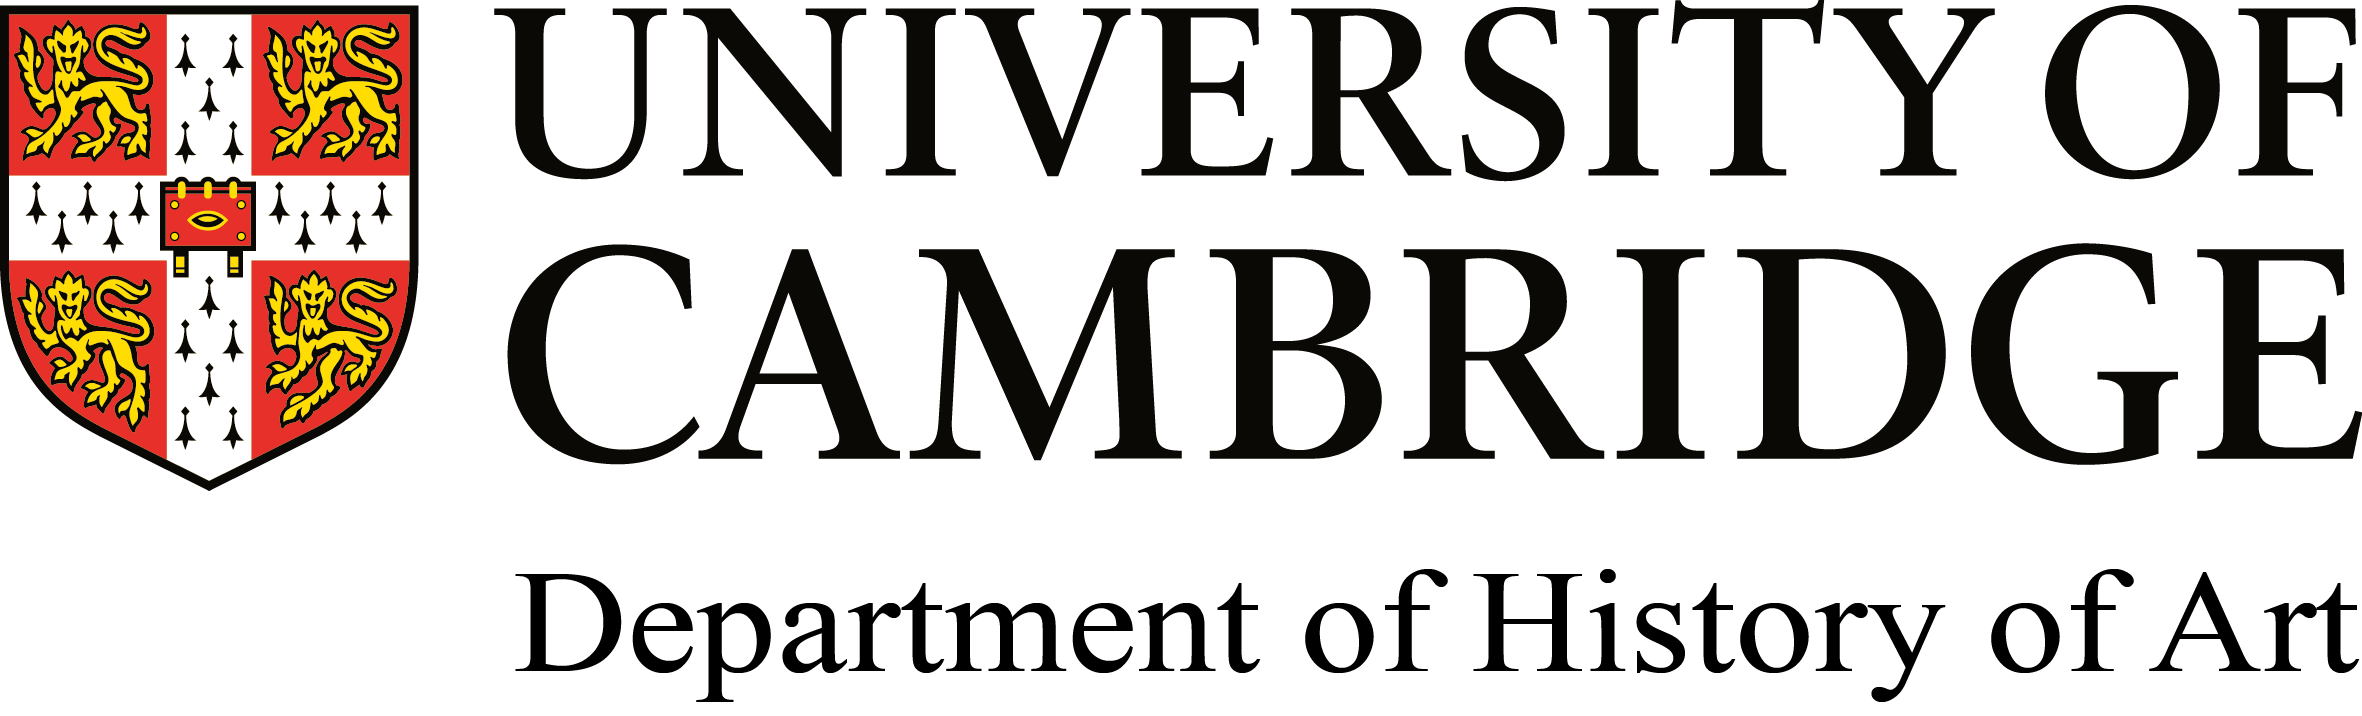 University of Cambridge, Department of History logo